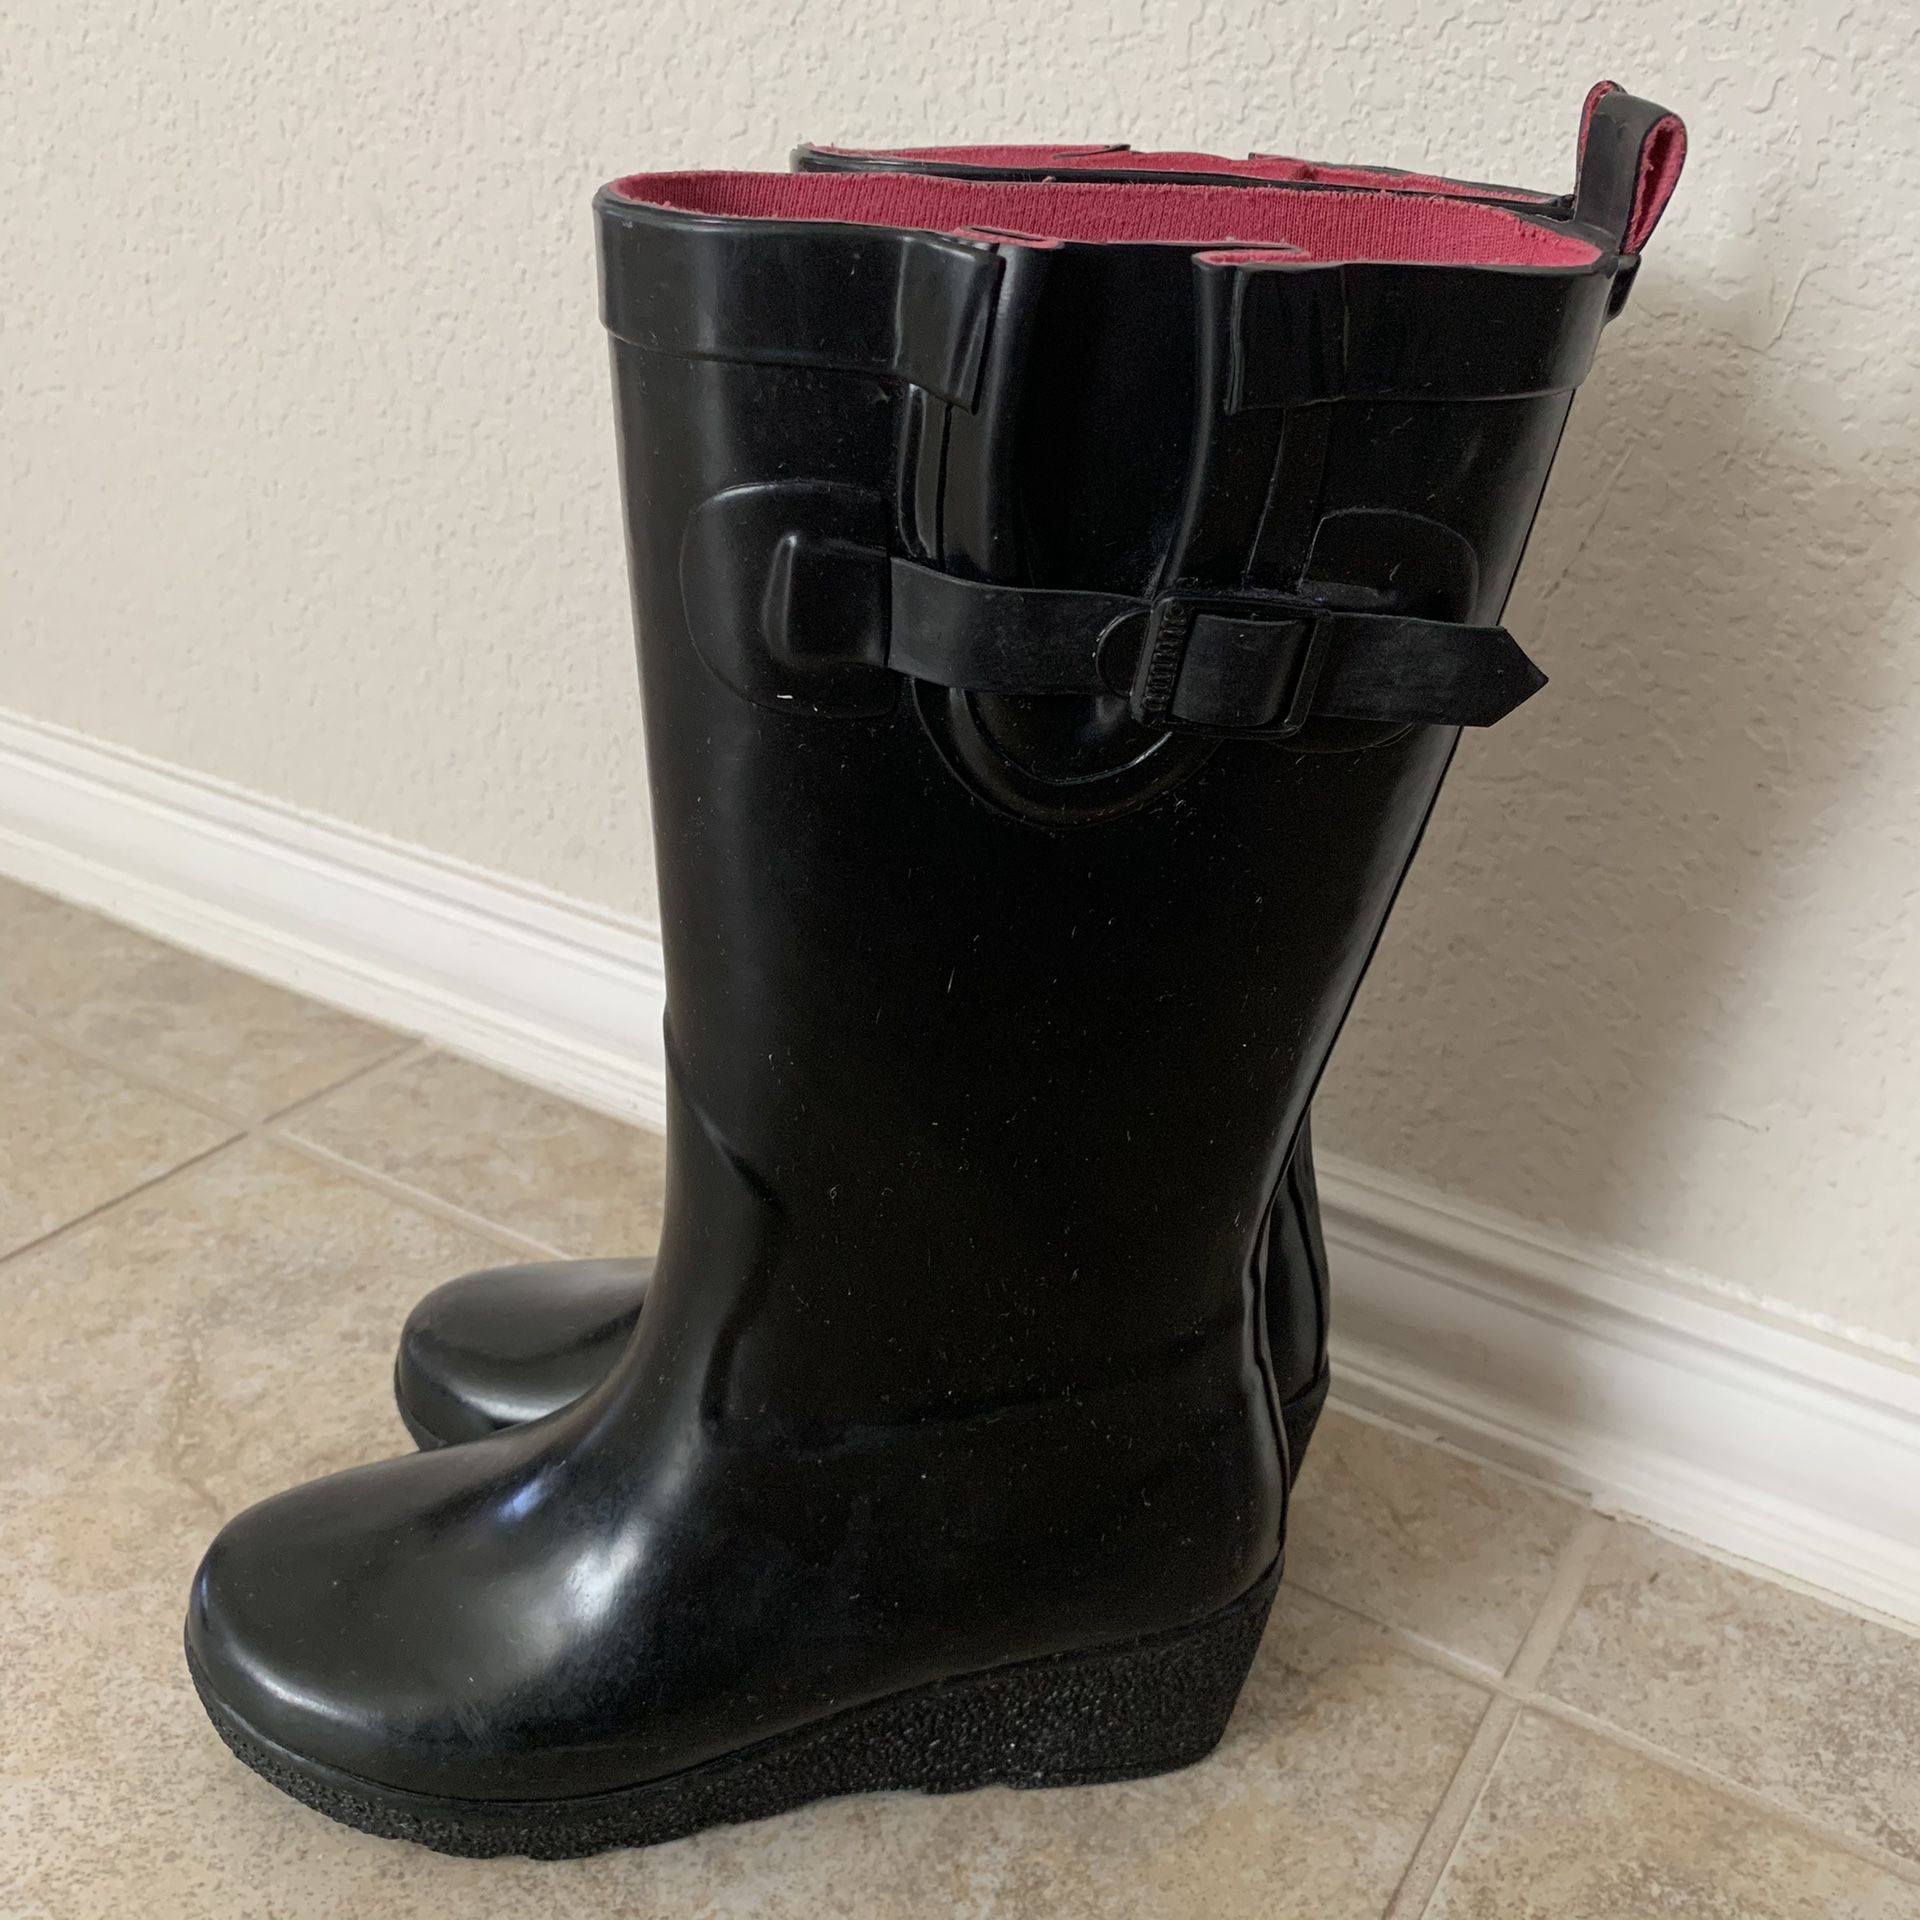 Women’s Rain Boots Size 7 Wedge Heels Black by Capelli